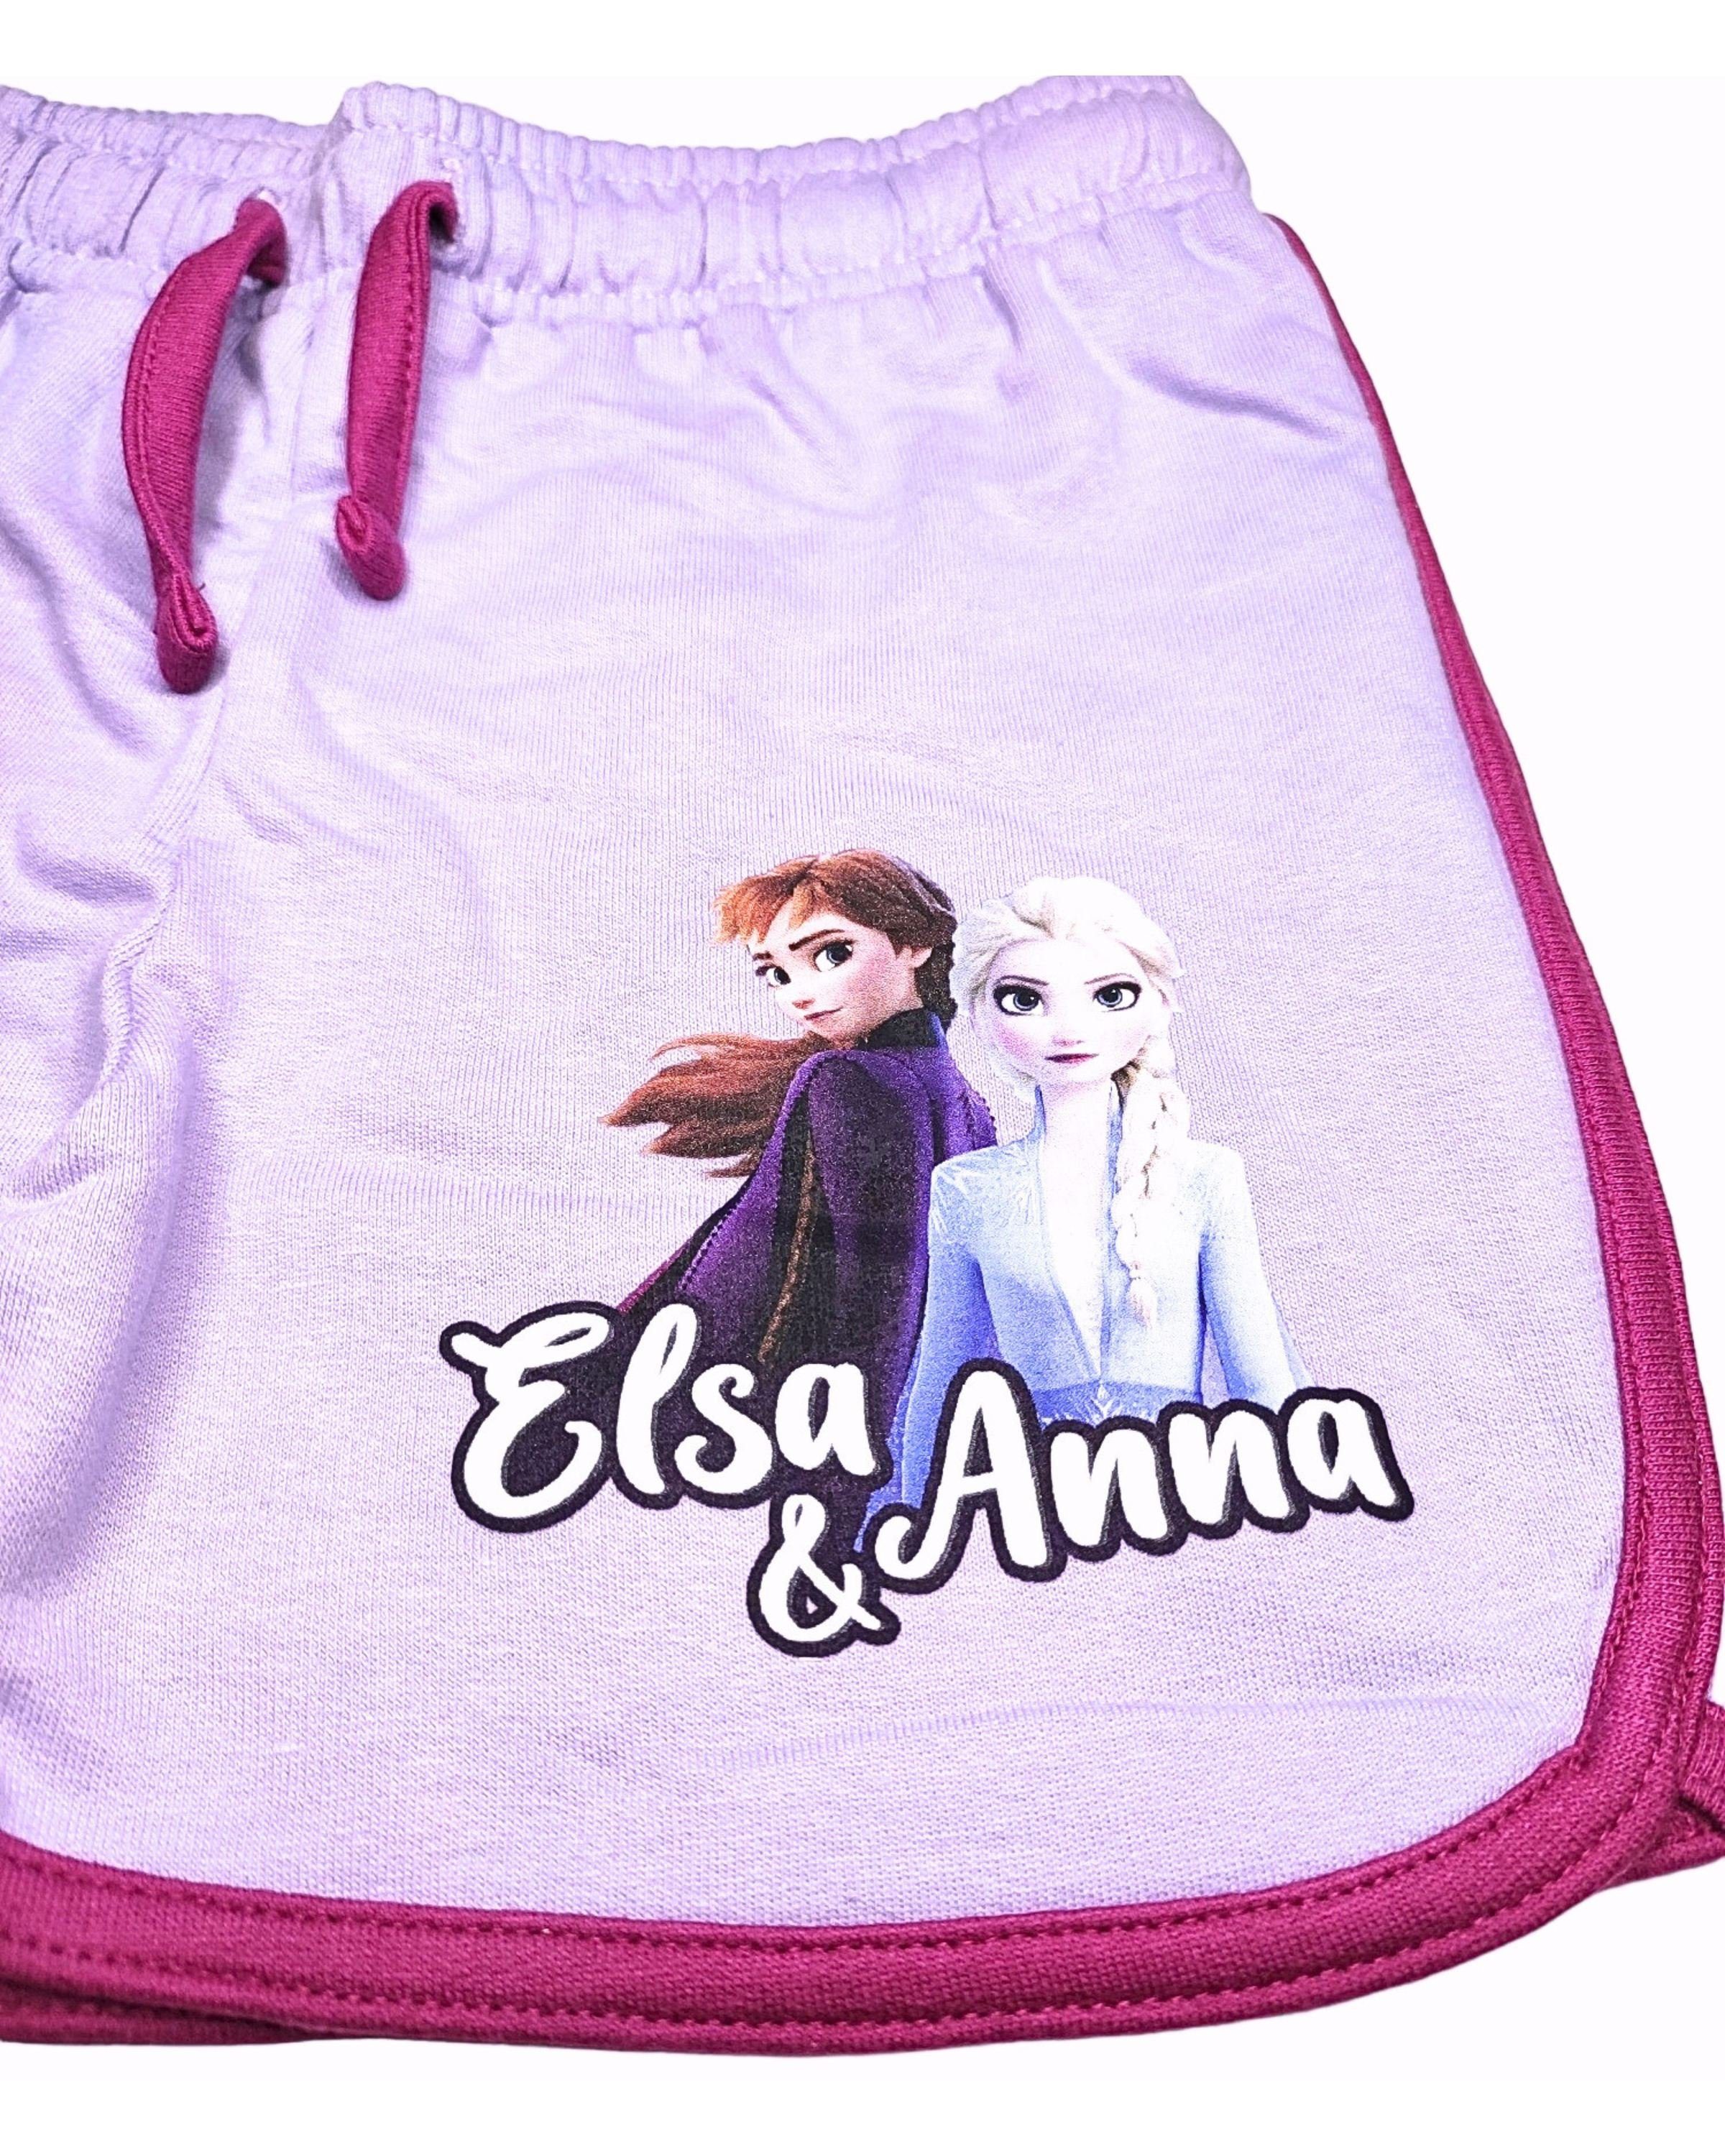 98 Anna Shorts Baumwolle Disney aus cm 128 - kurze Frozen Hose Elsa Mädchen Gr. & Lila